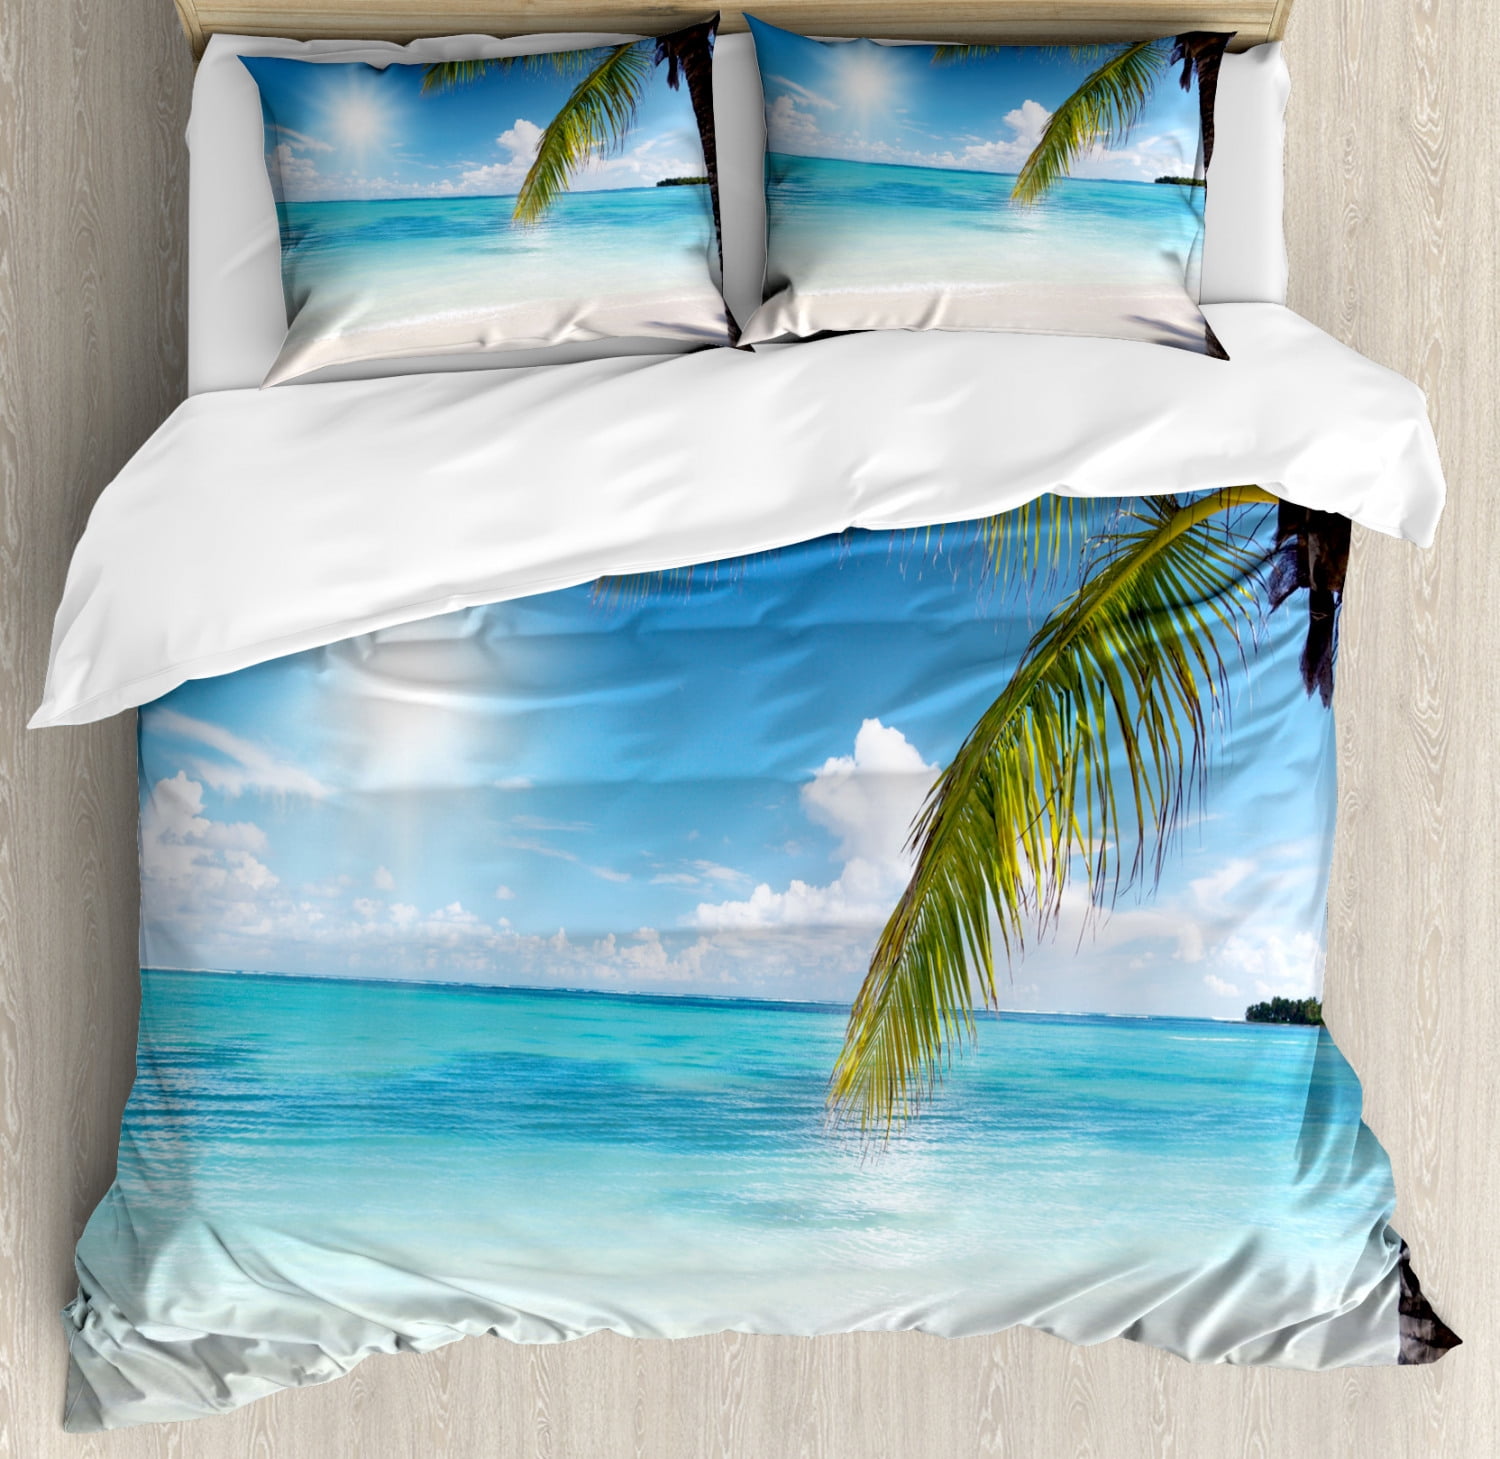 Coastal Quilted Bedspread & Pillow Shams Set Palm Trees Island Shore Print 